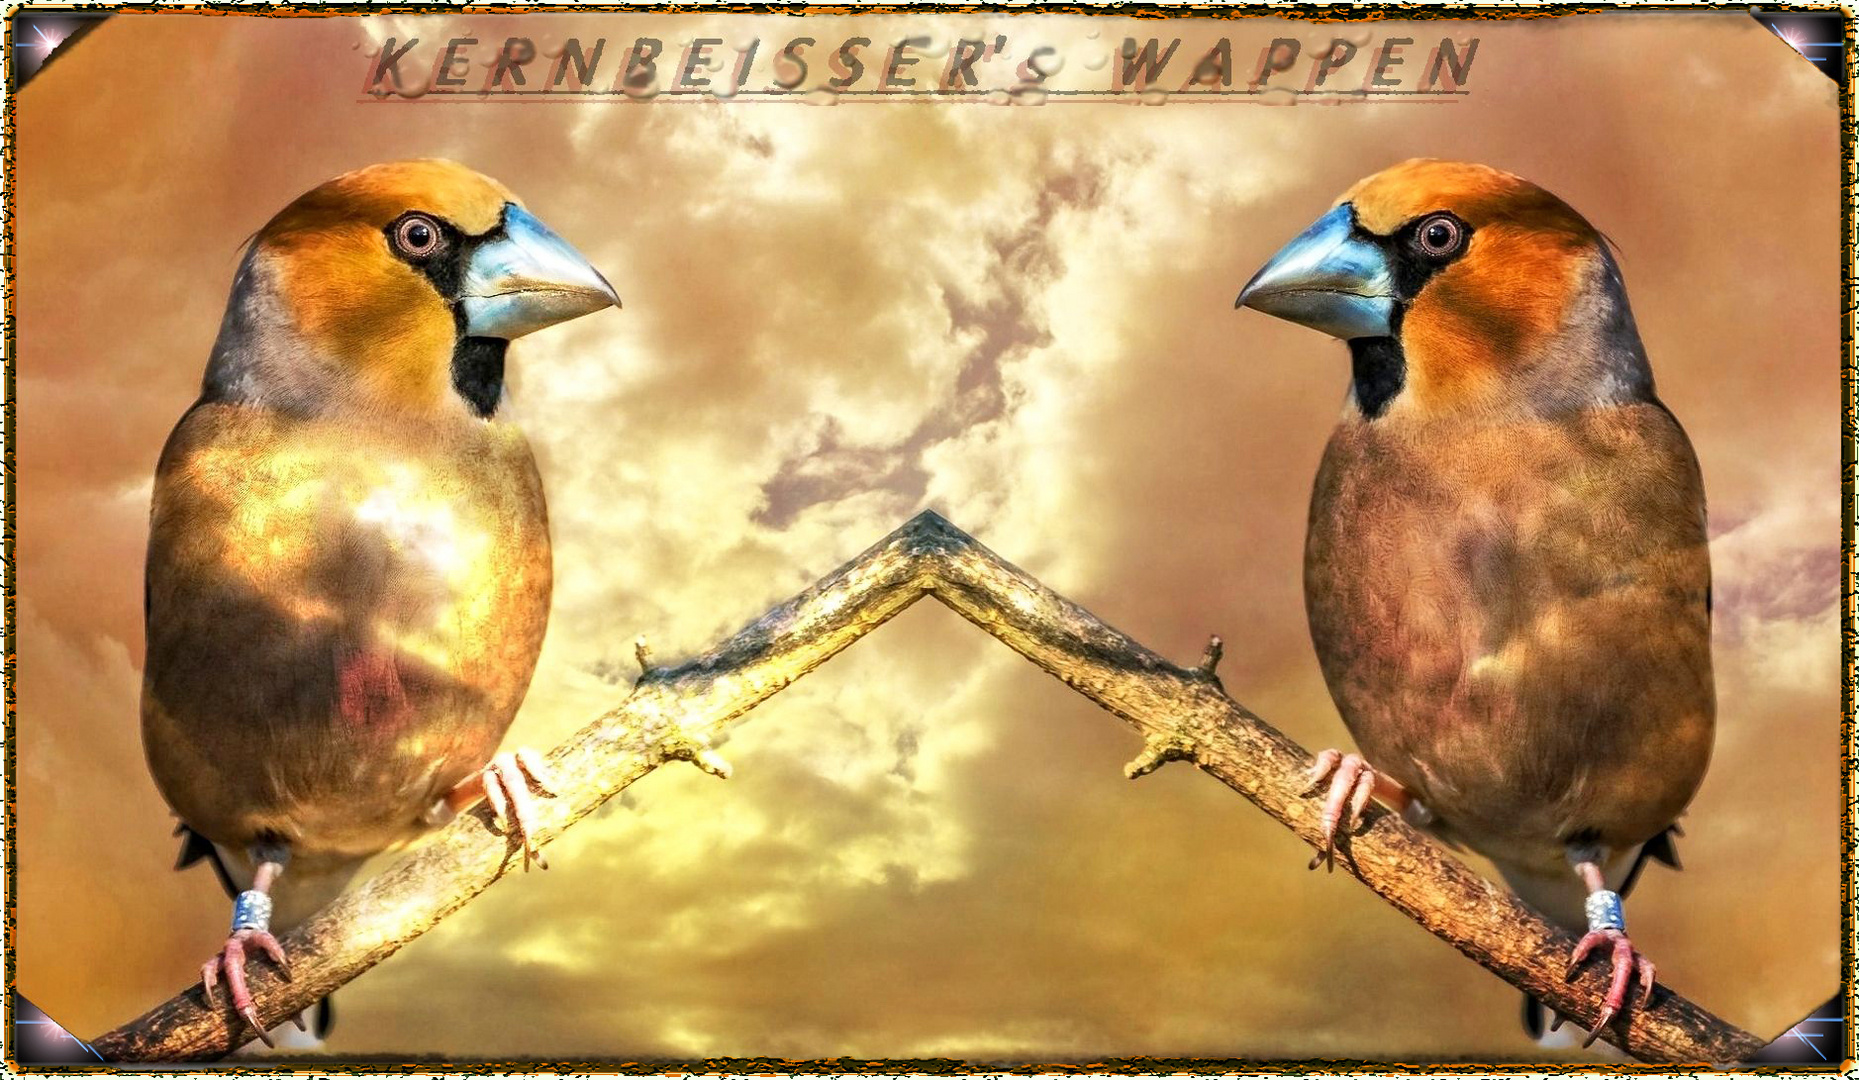 "KERNBEISSER's WAPPEN" (Endbild)